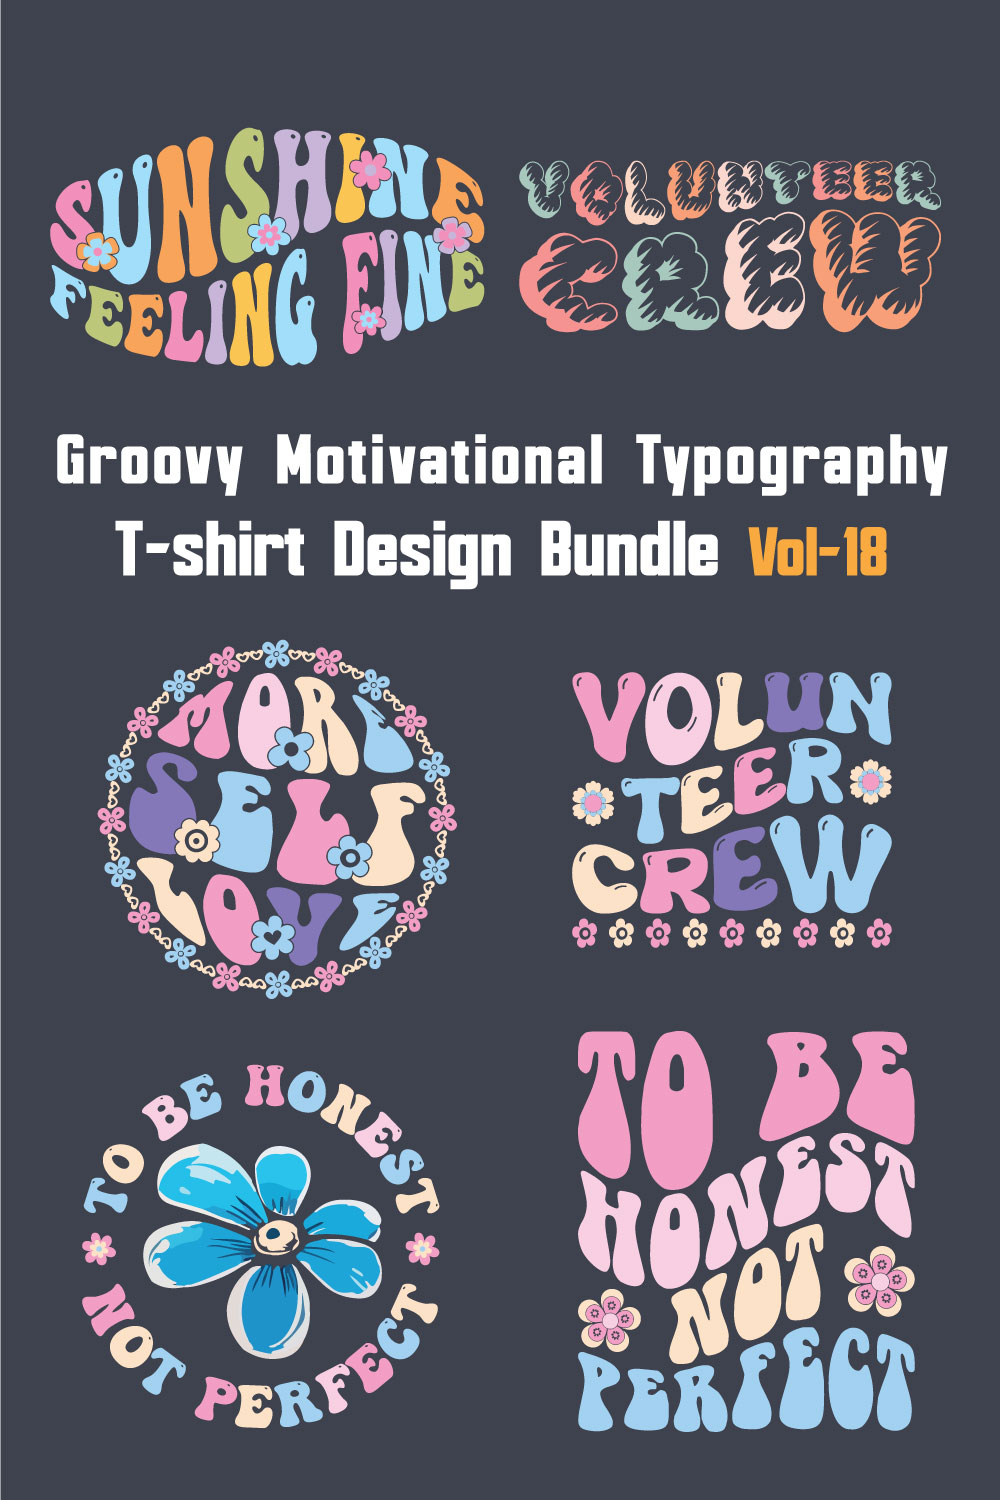 Groovy Motivational Typography T-shirt Design Bundle Vol-18 pinterest preview image.